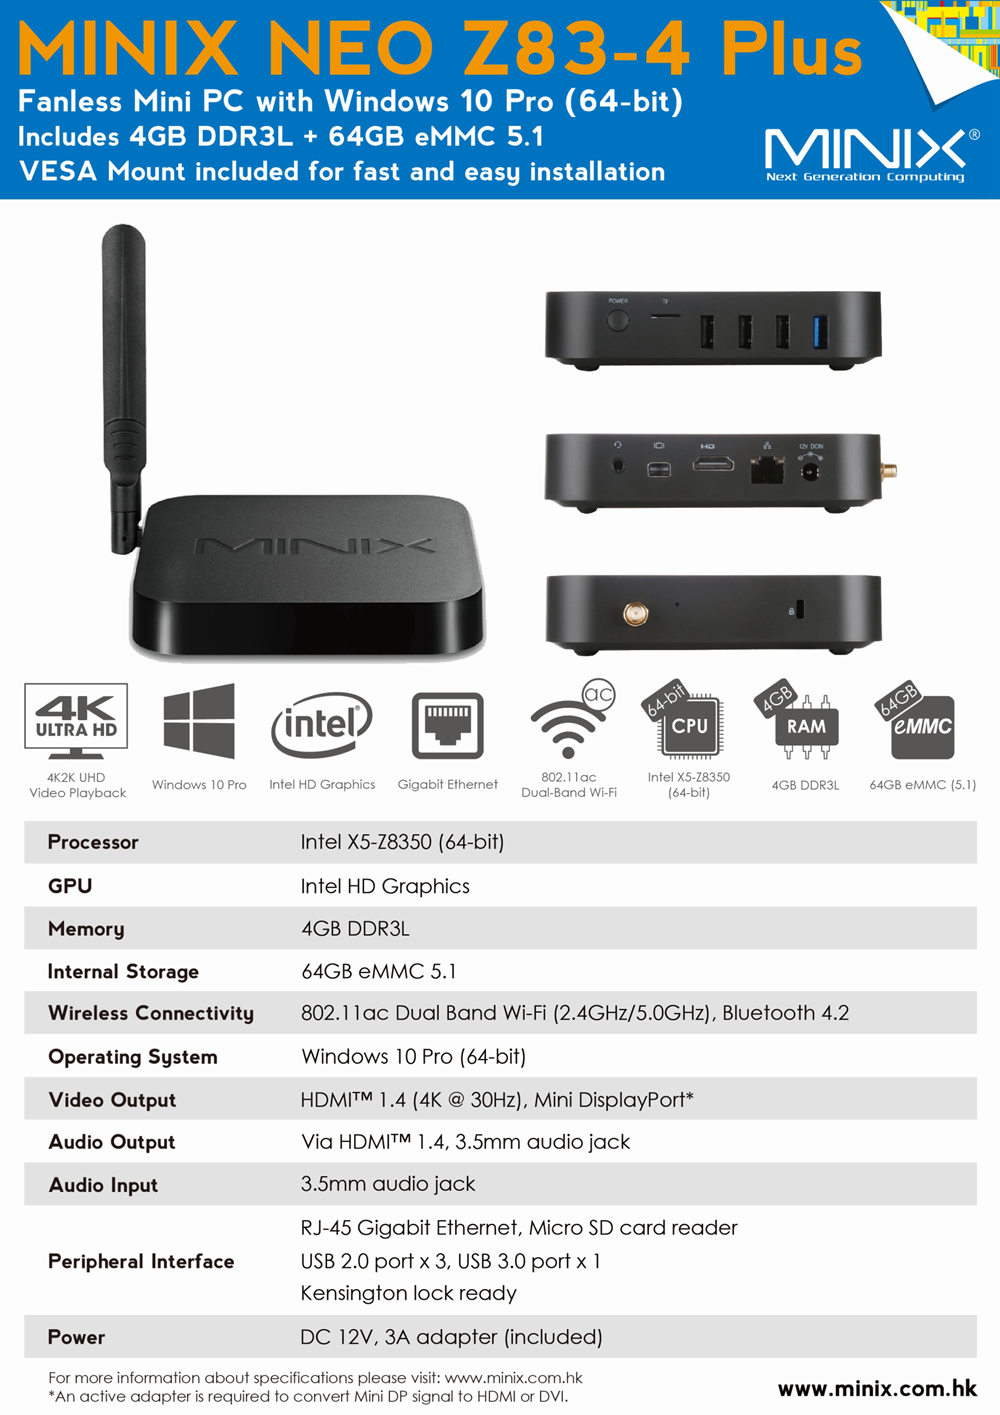 MINIX NEO Z83-4 Plus Intel  Windows10 4GB/64GB Fanless Mini PC Dual Band WiFi Gigabit LAN USB3.0 HDMI + MINI DP